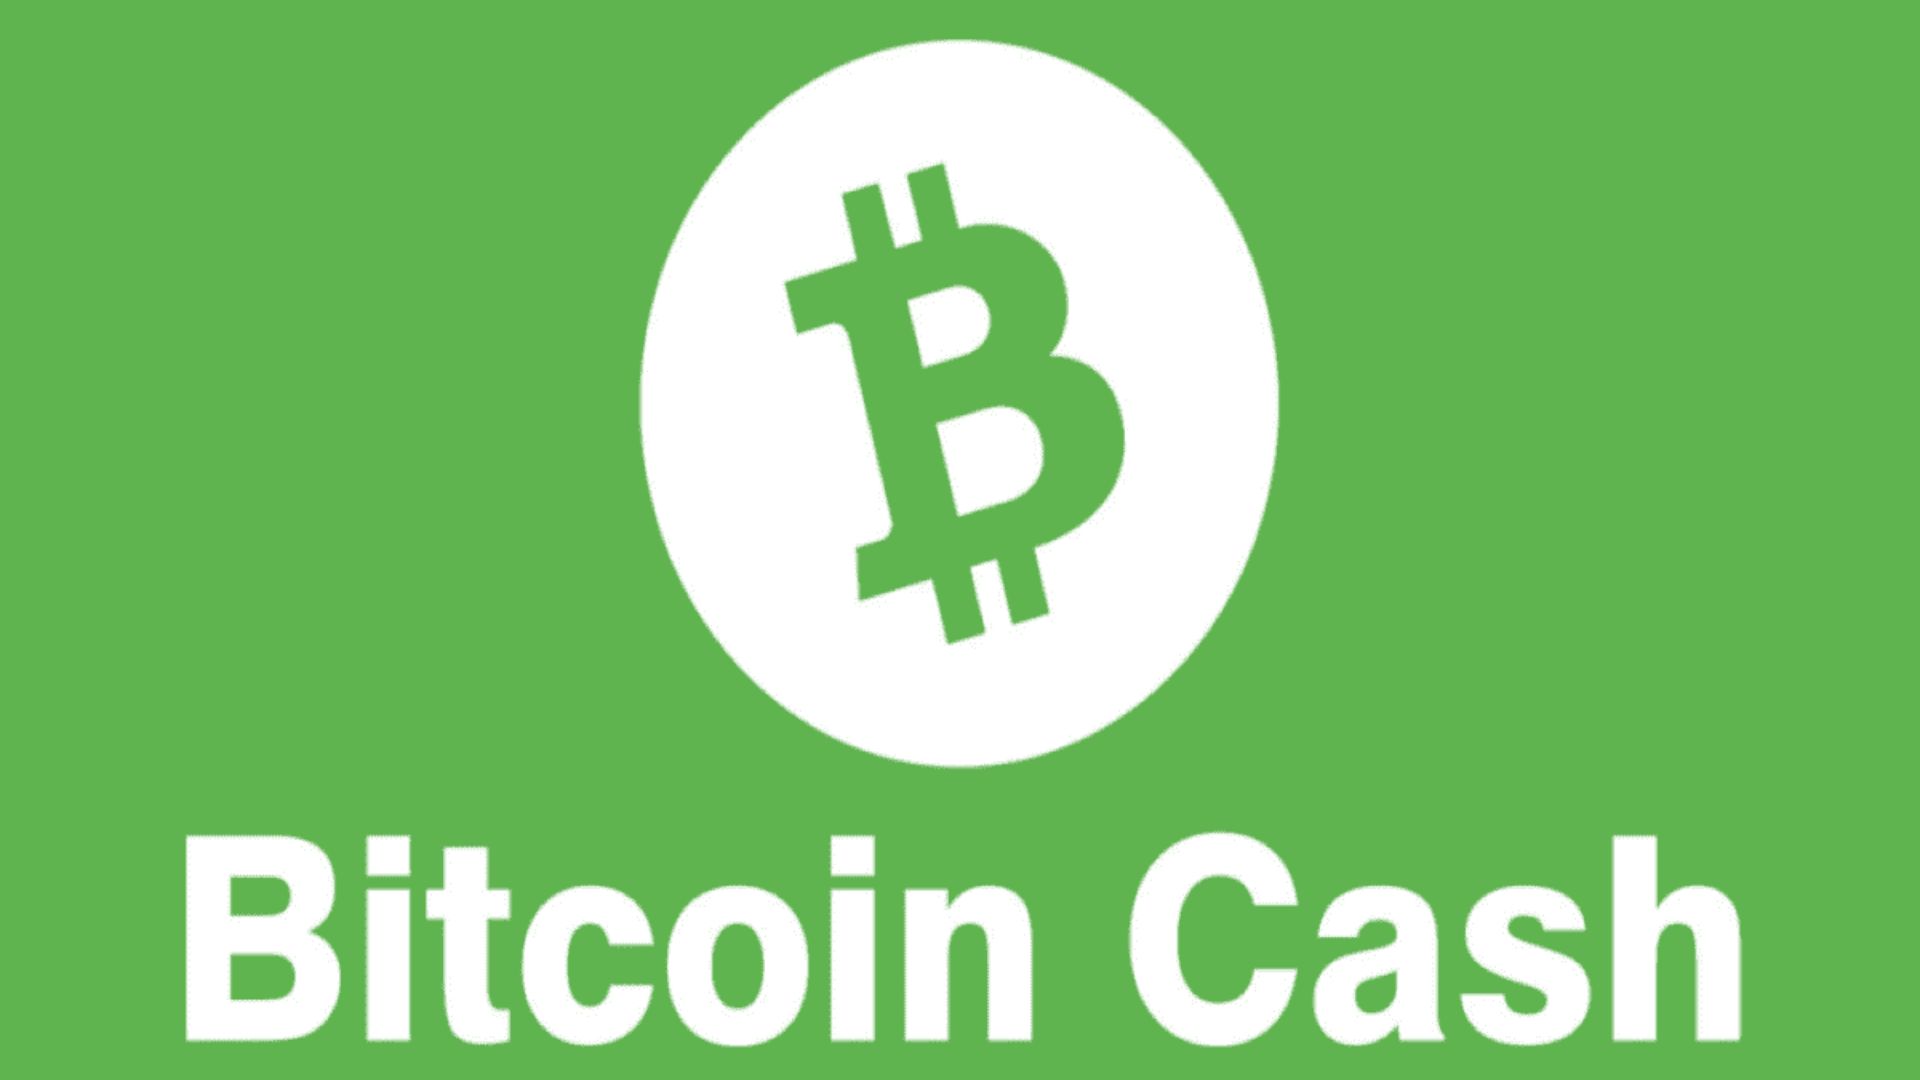 Bitcoin Cash price